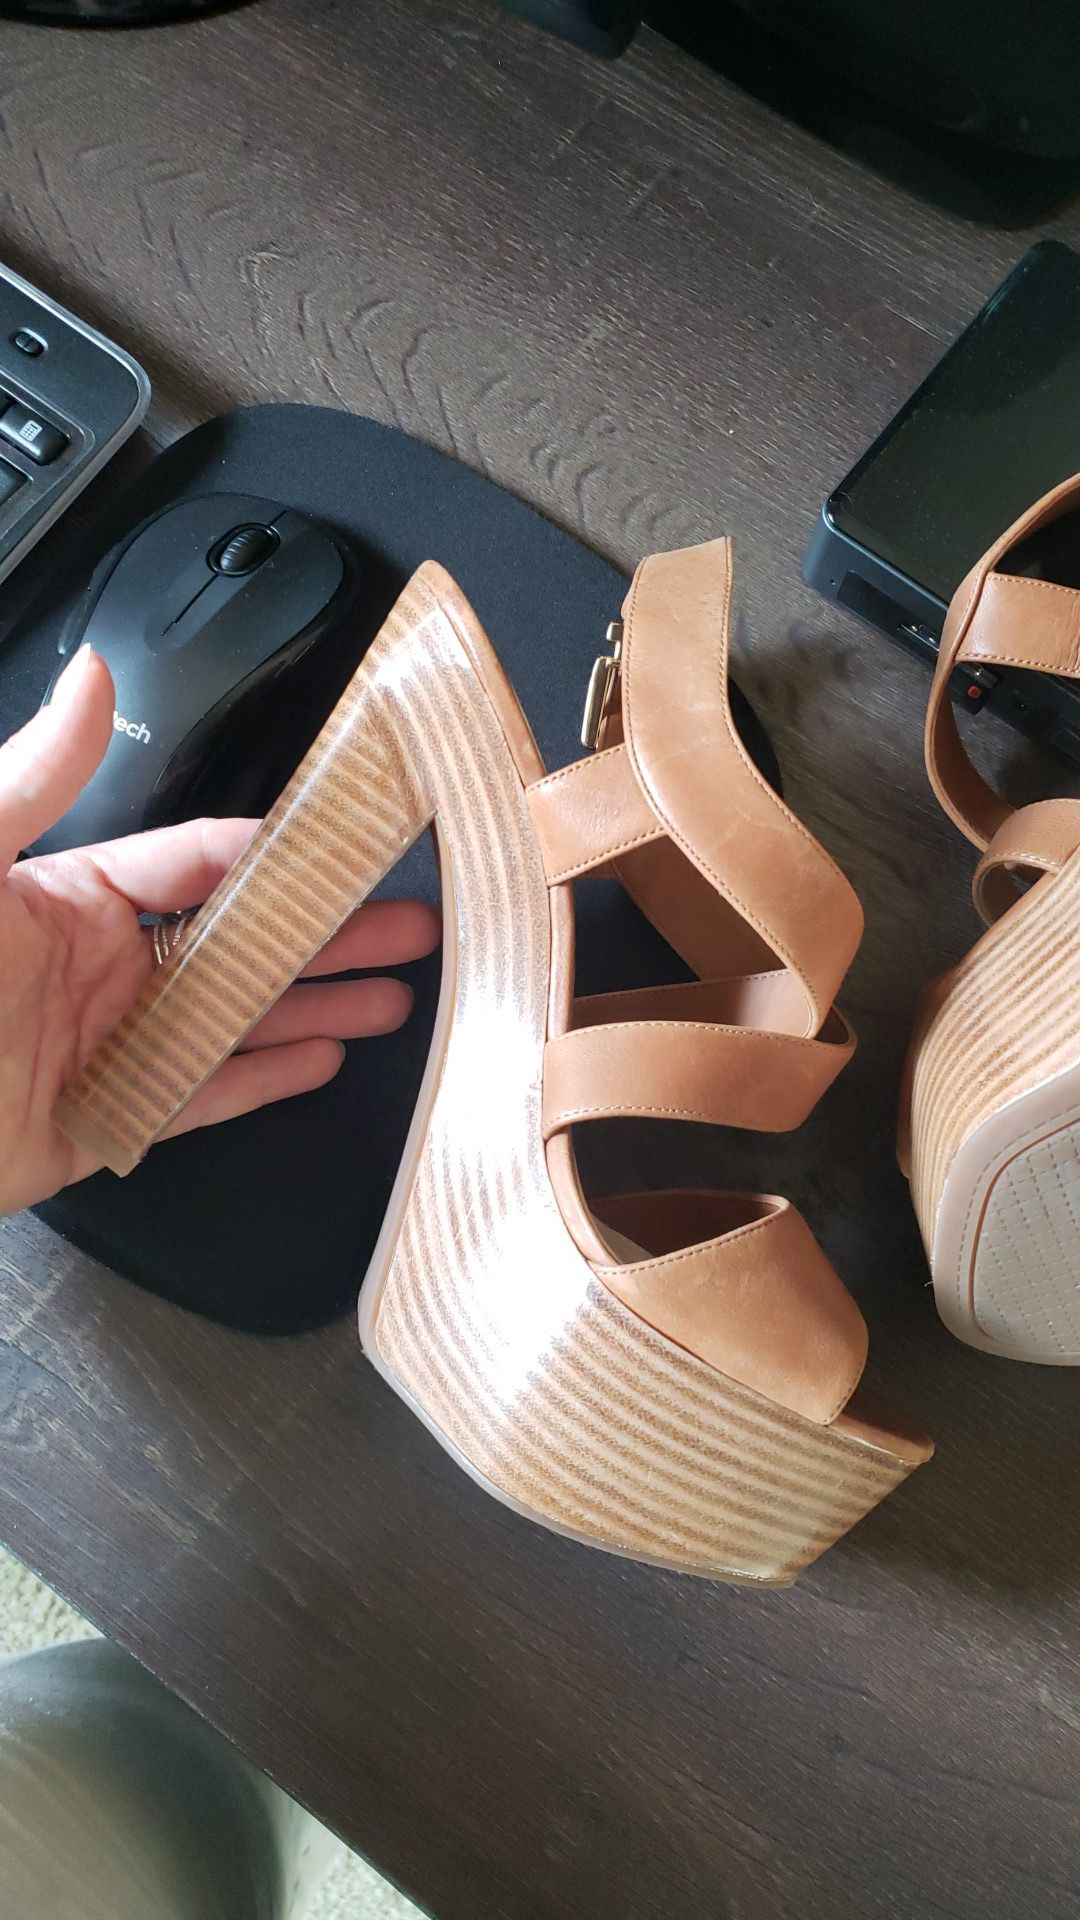 Jessica Simpson tan heels wedges size 8